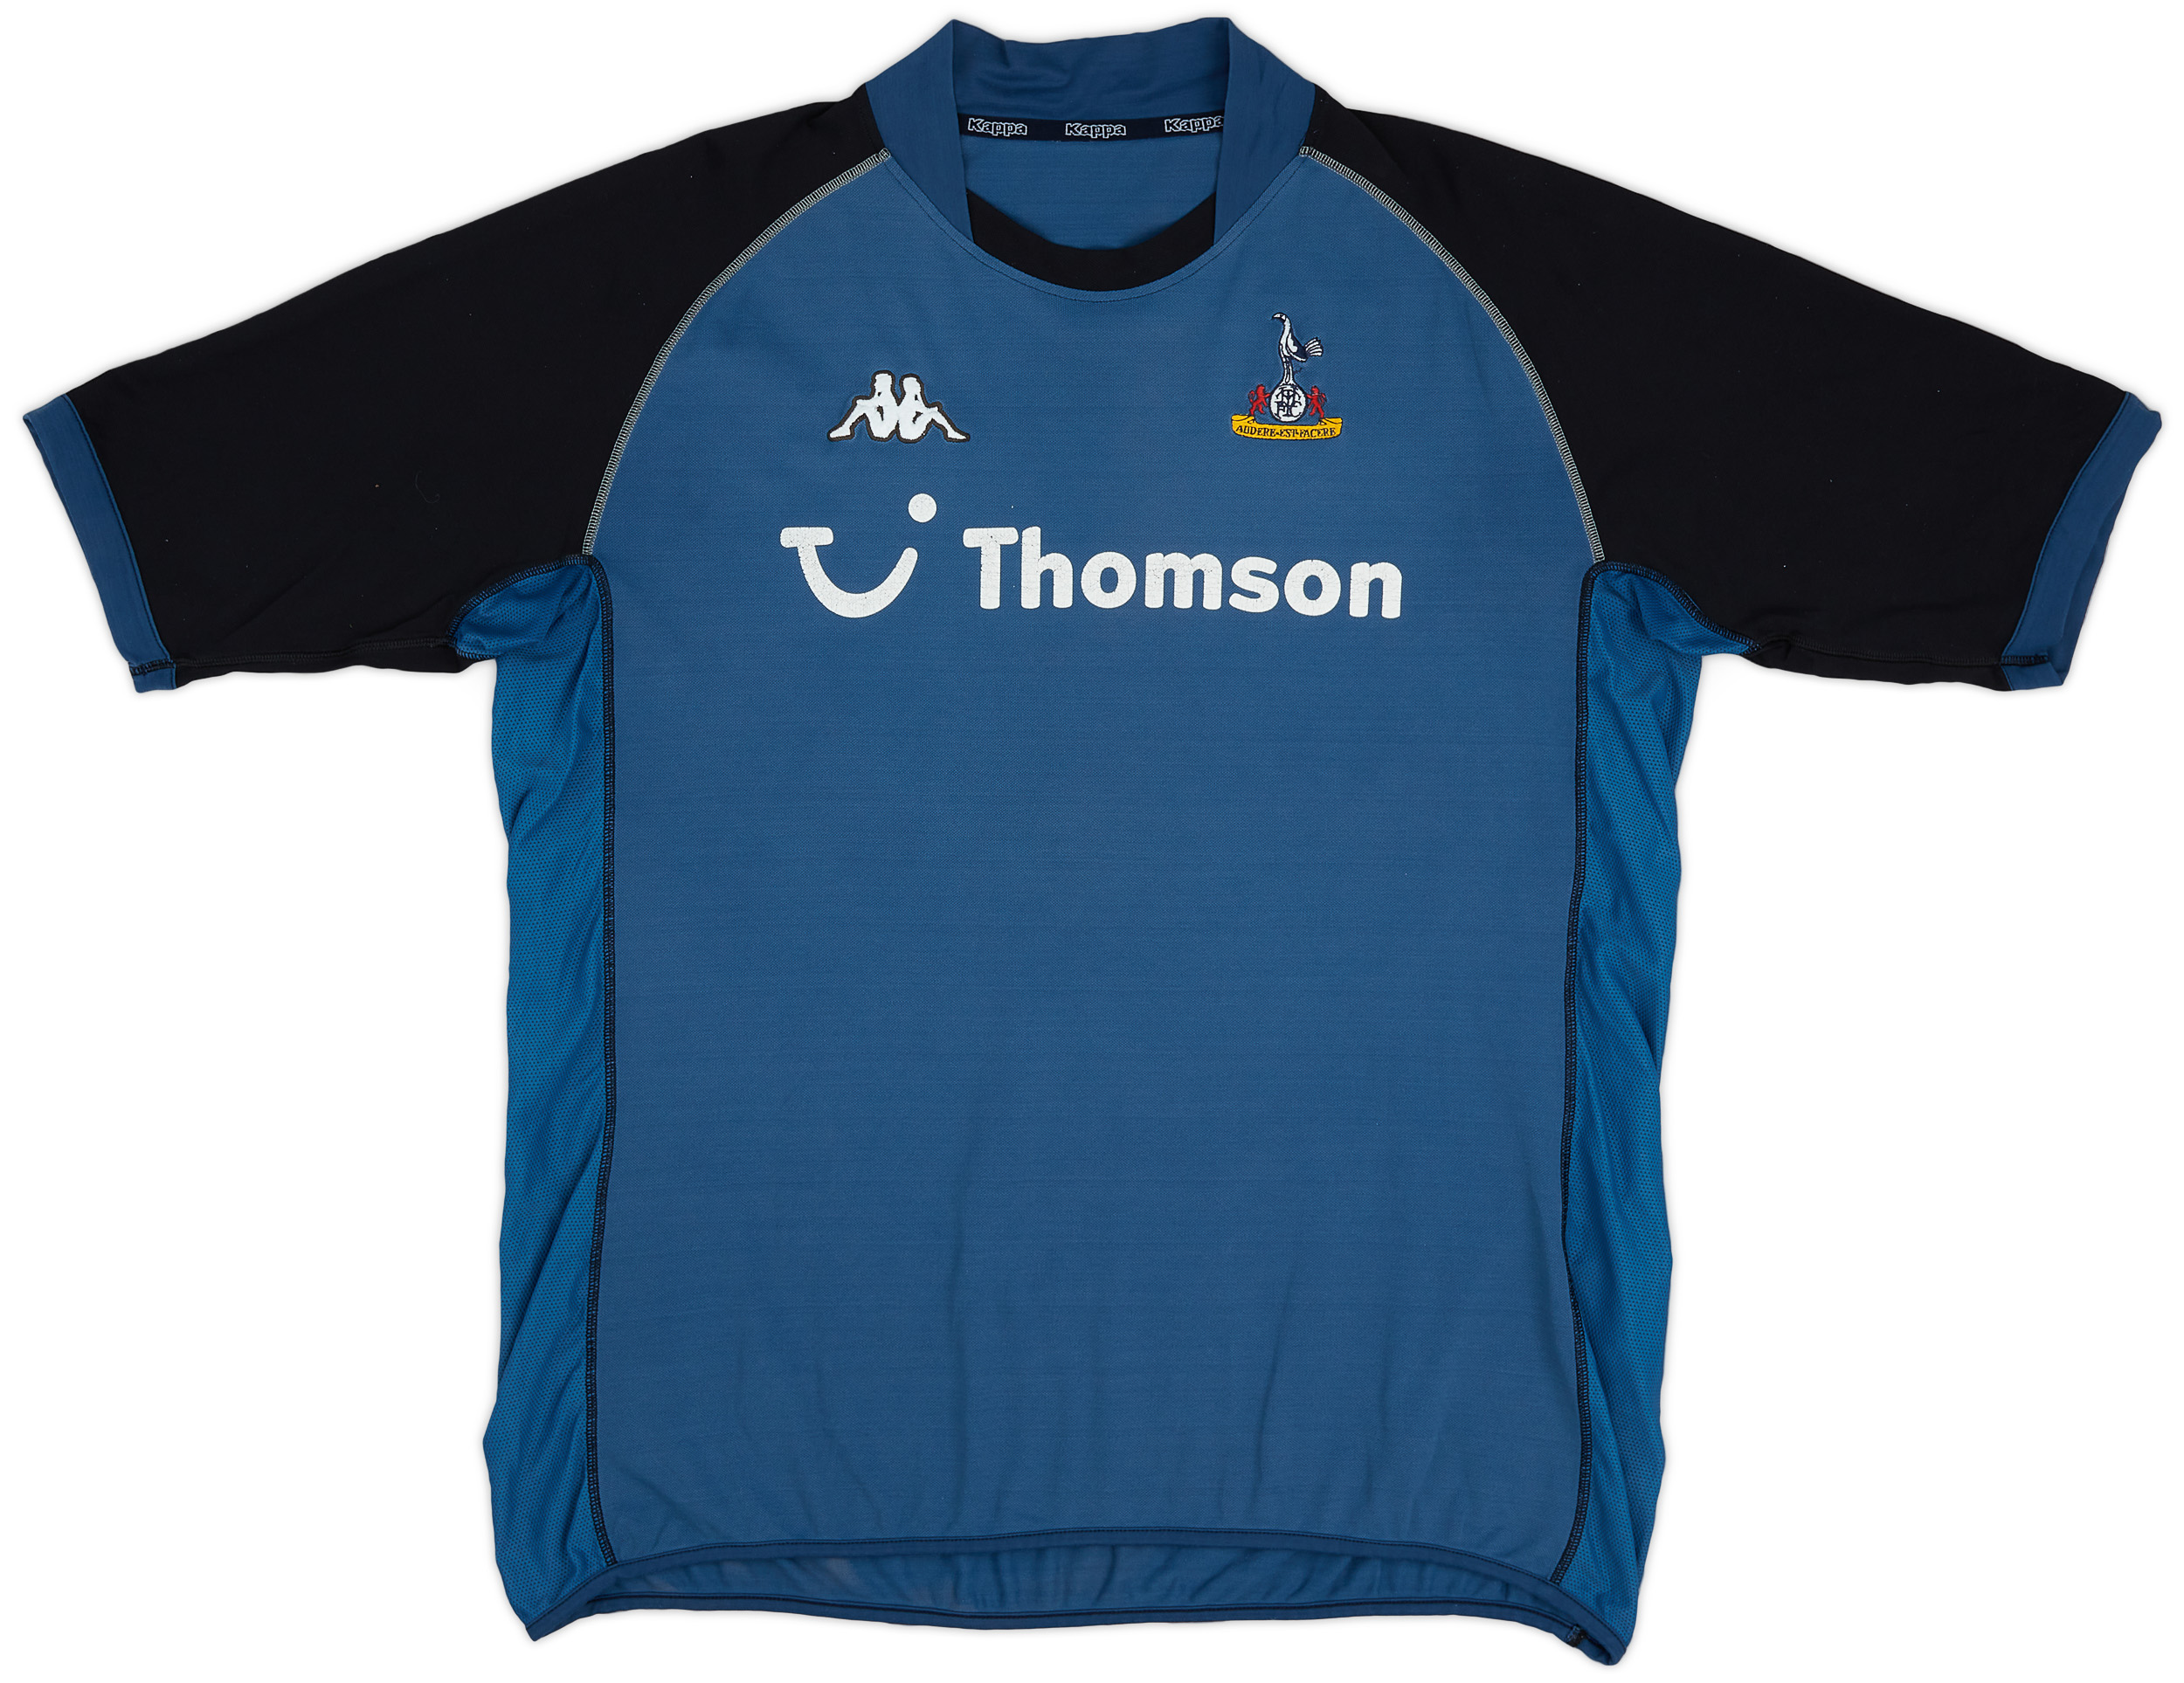 Tottenham Hotspur Away football shirt 2004 - 2005.